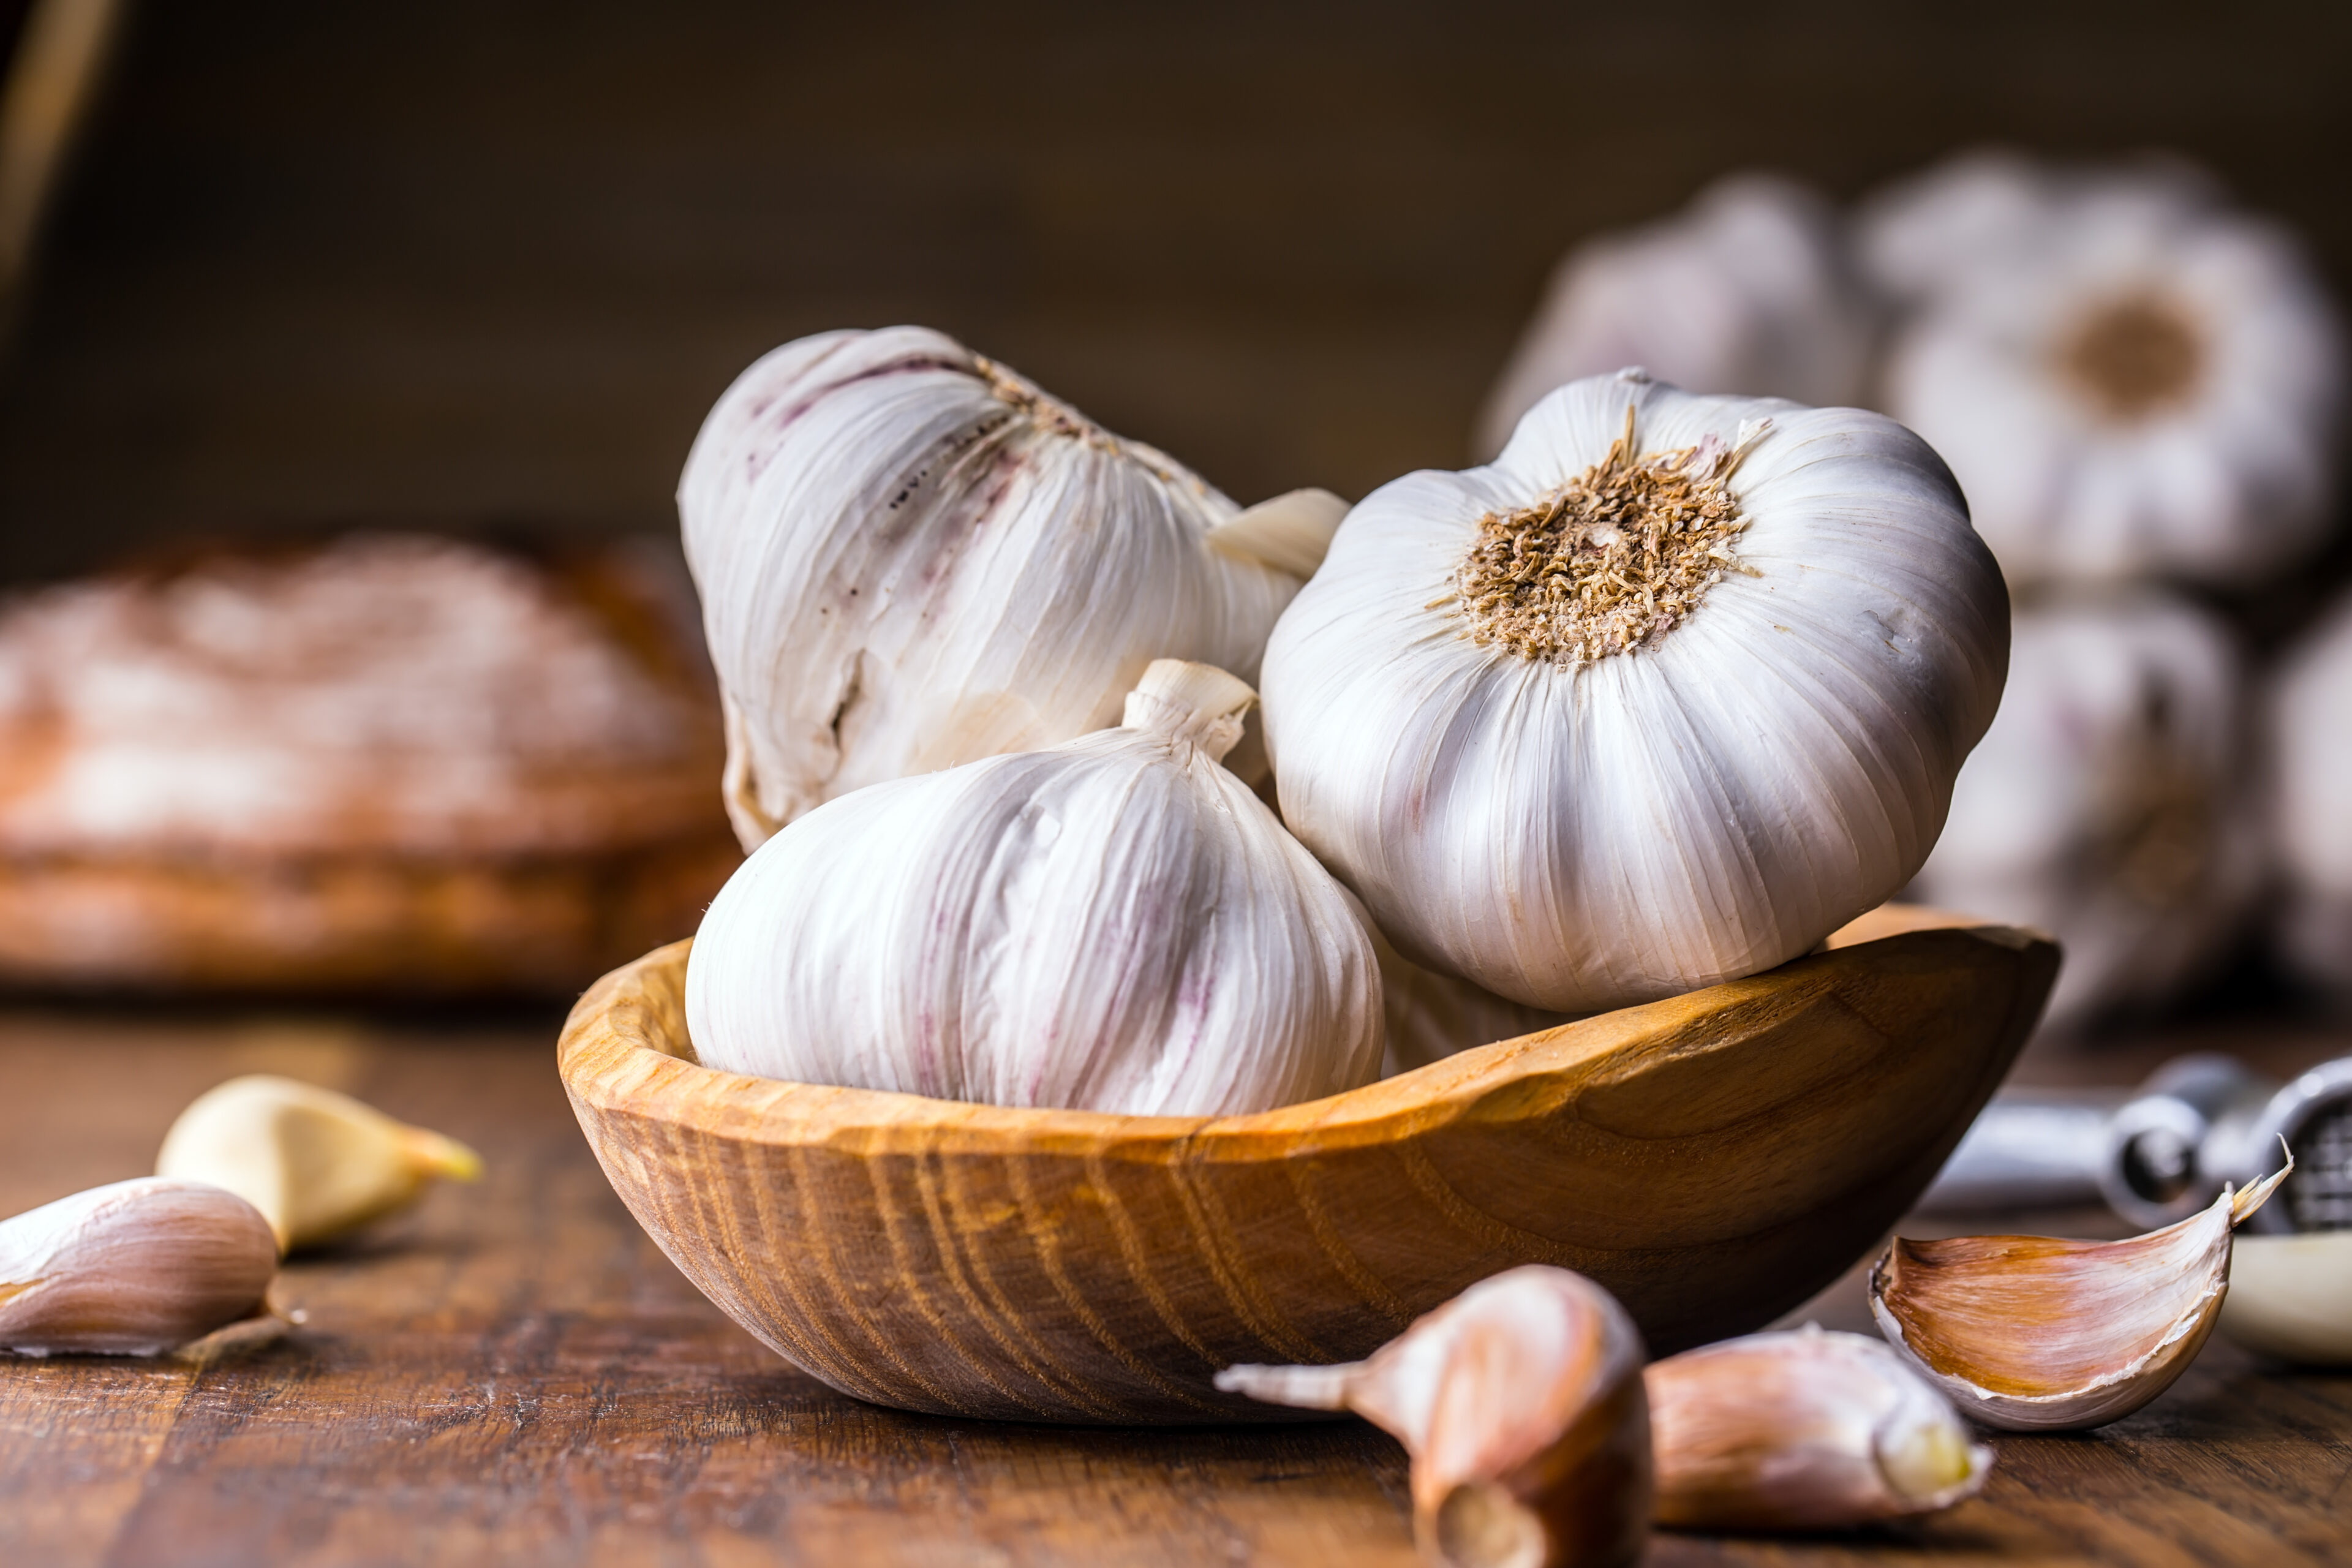 Garlic: A flavorful hair growth booster